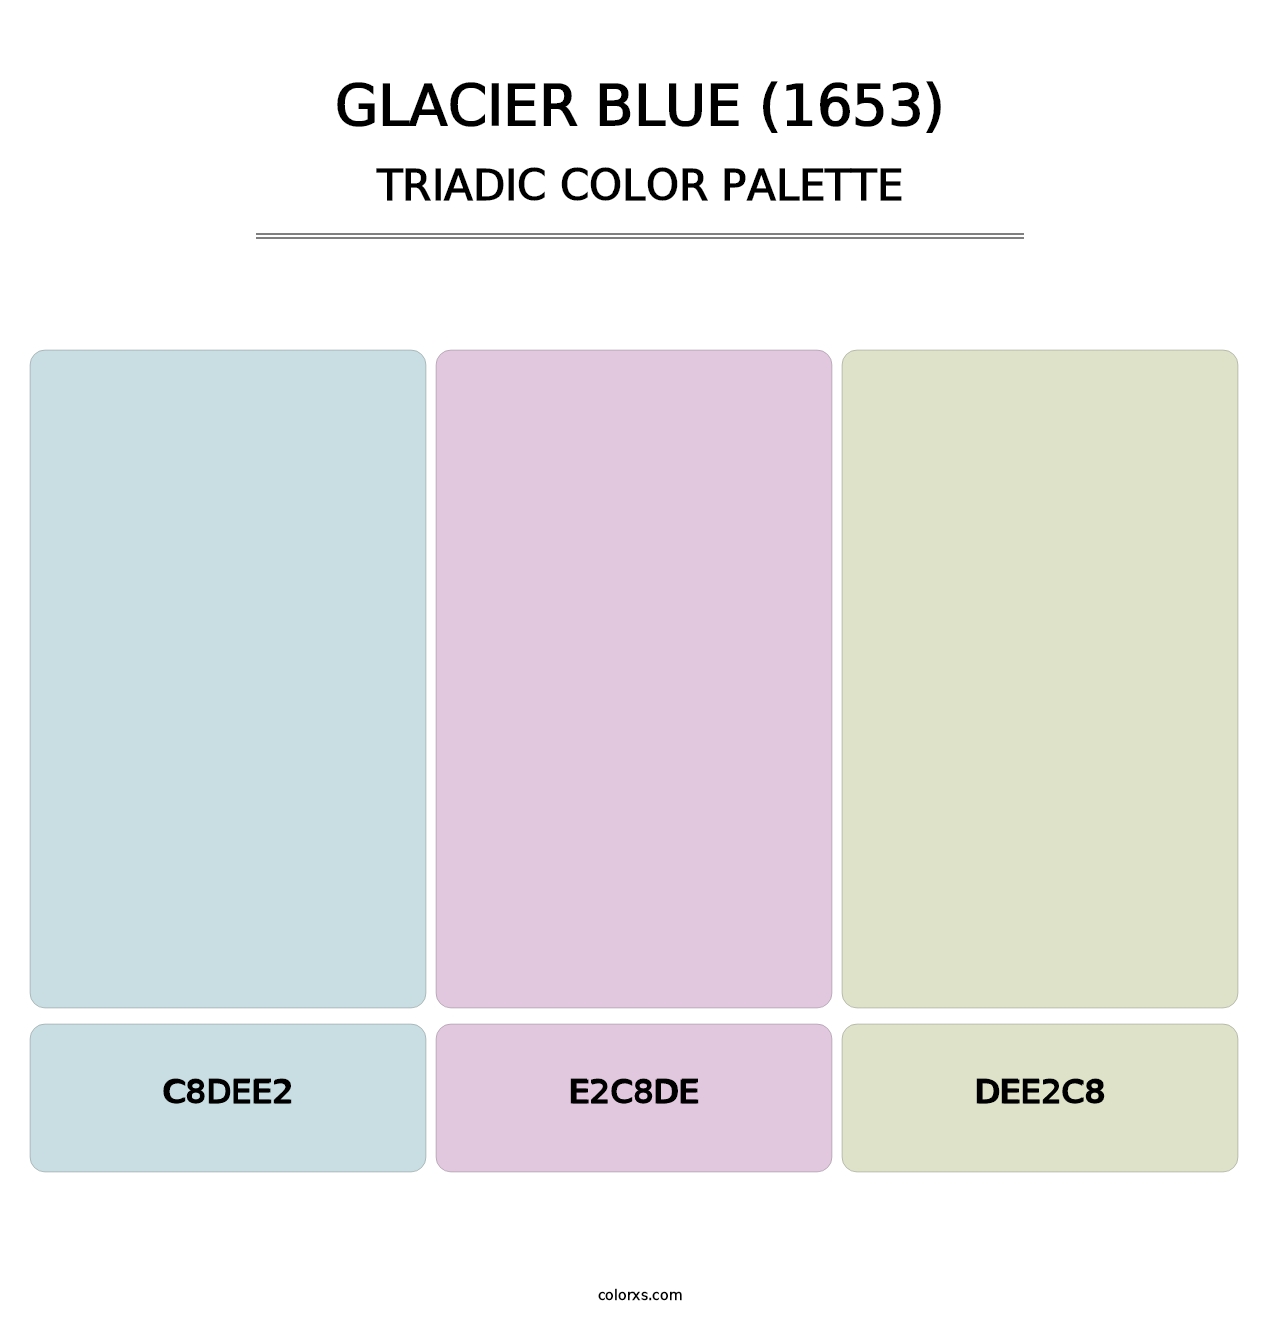 Glacier Blue (1653) - Triadic Color Palette